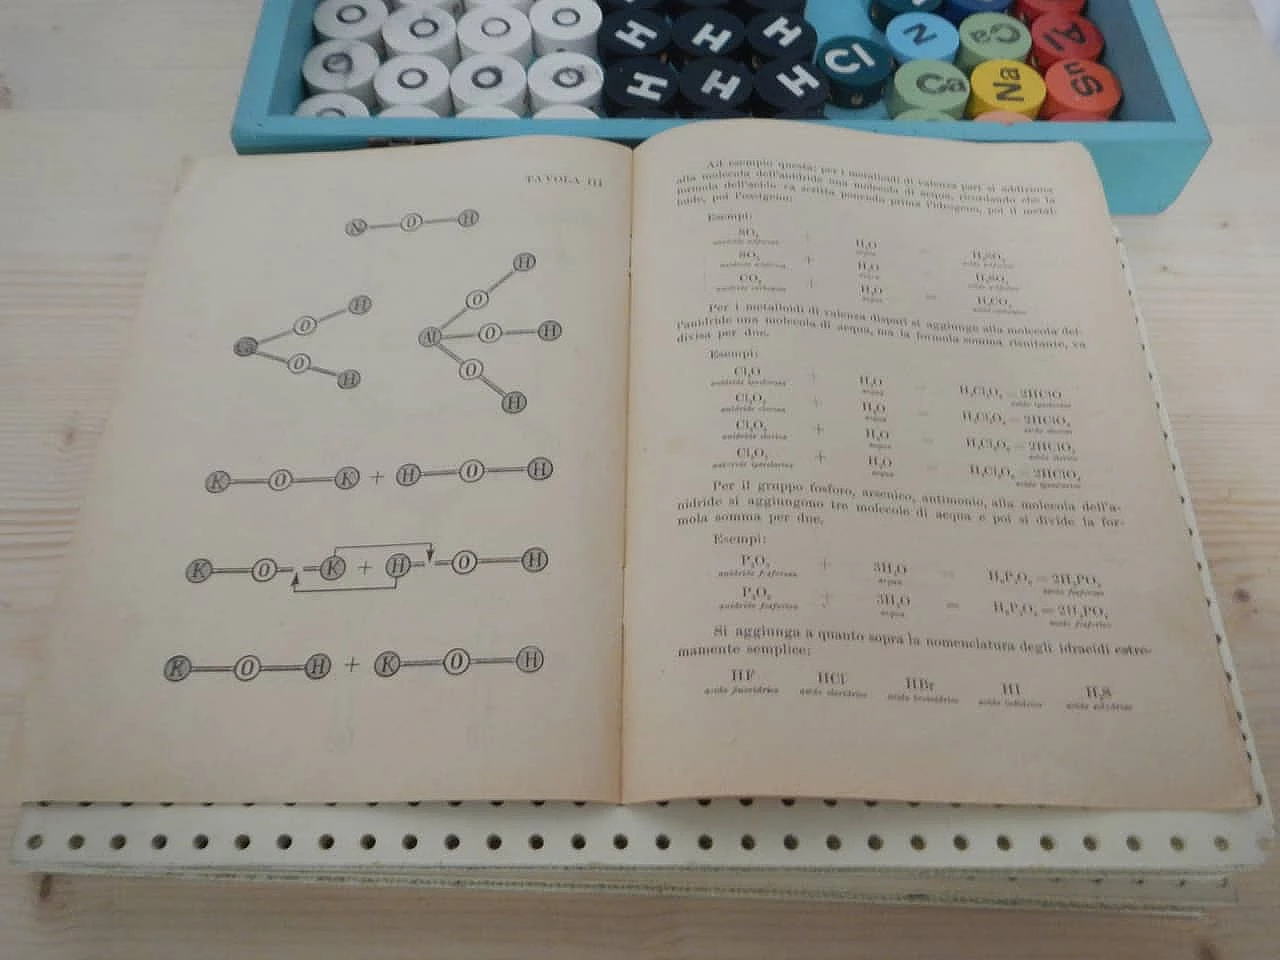 Formulator chemical nomenclature box for Paravia, 1948 11